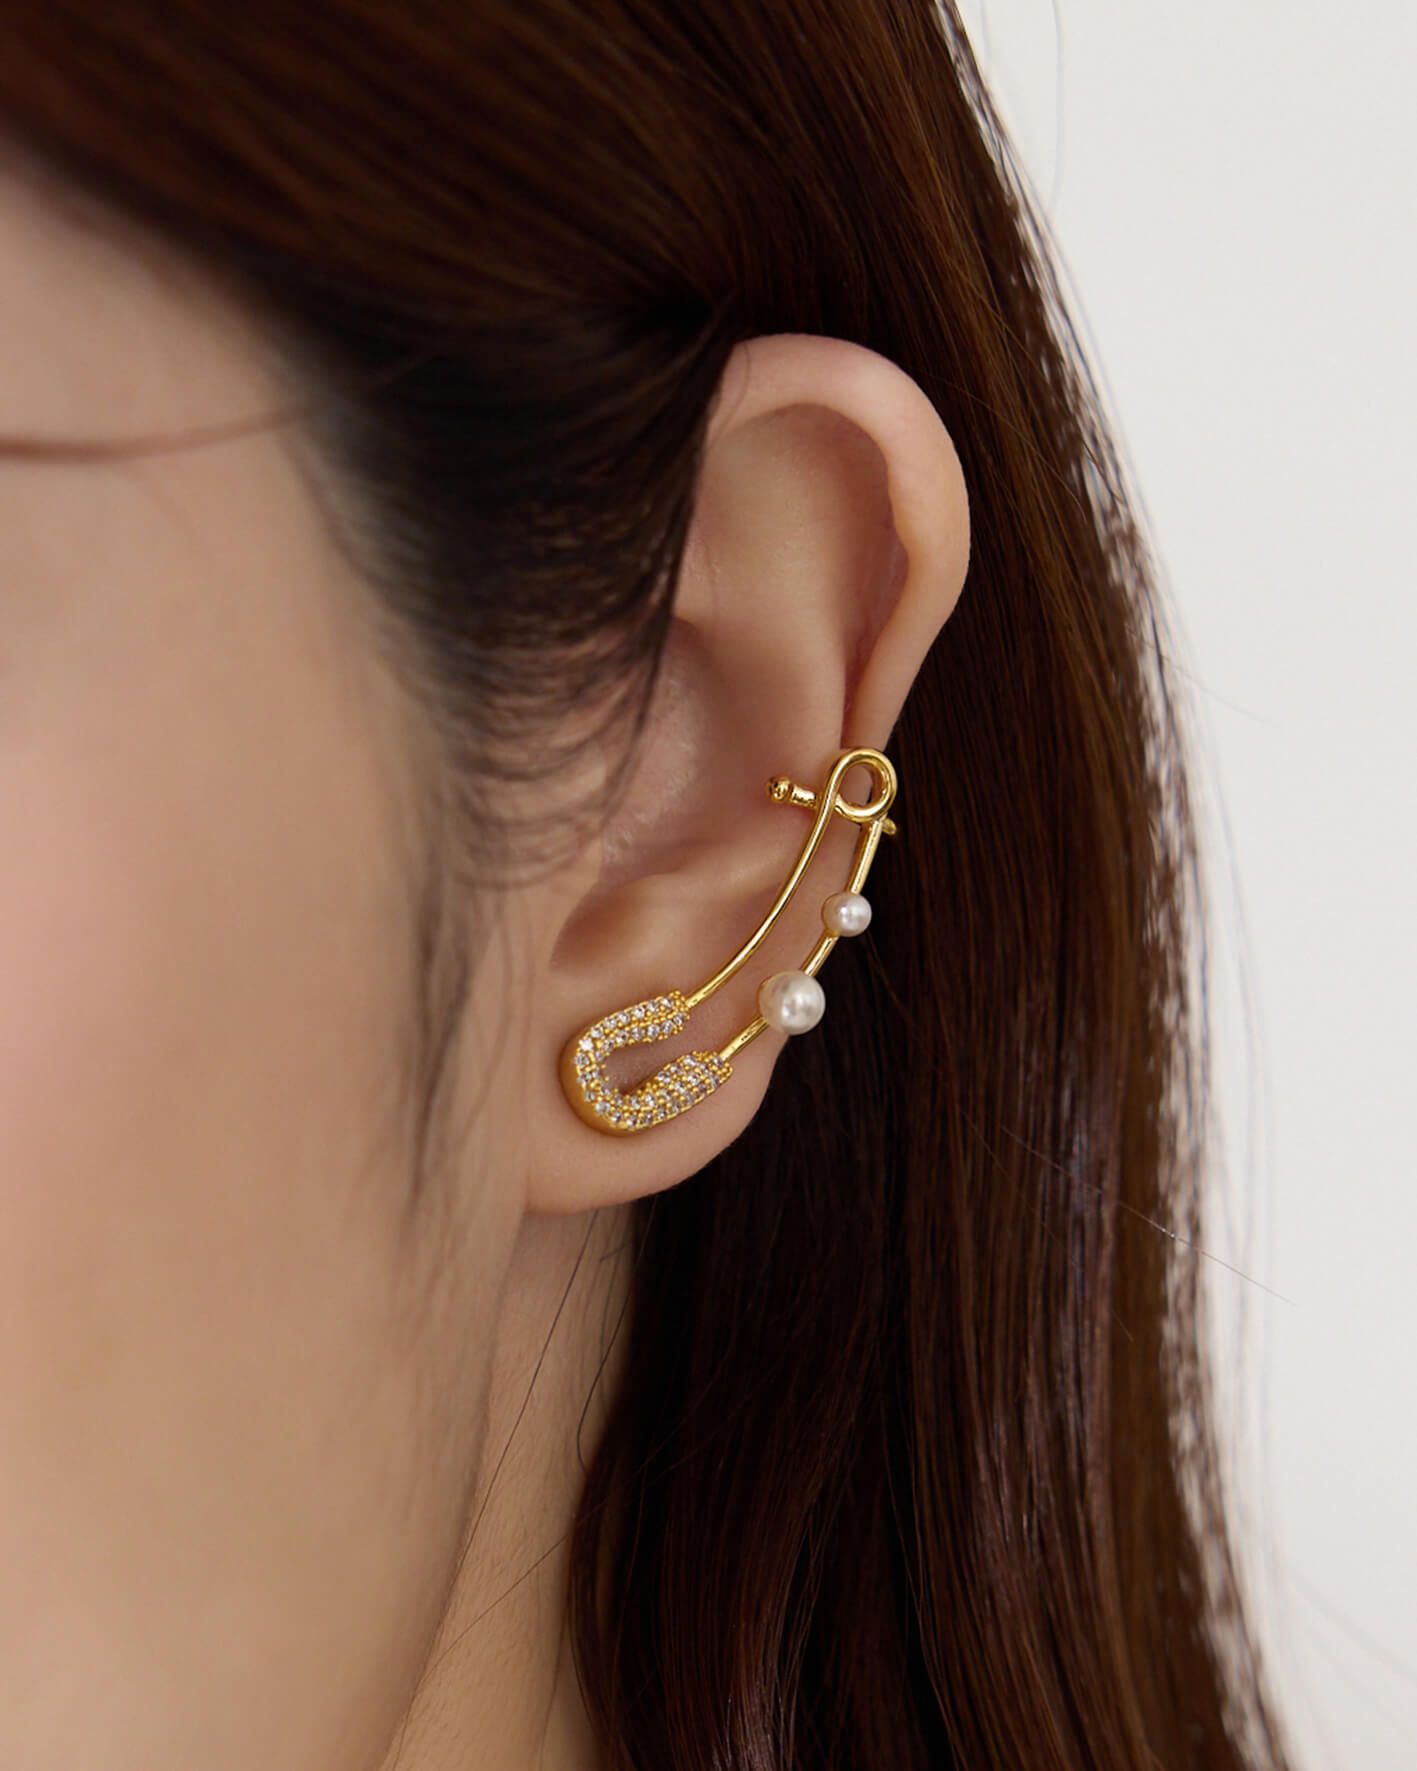 Eco安珂,韓國飾品,韓國耳環,耳針式耳環,別針耳環